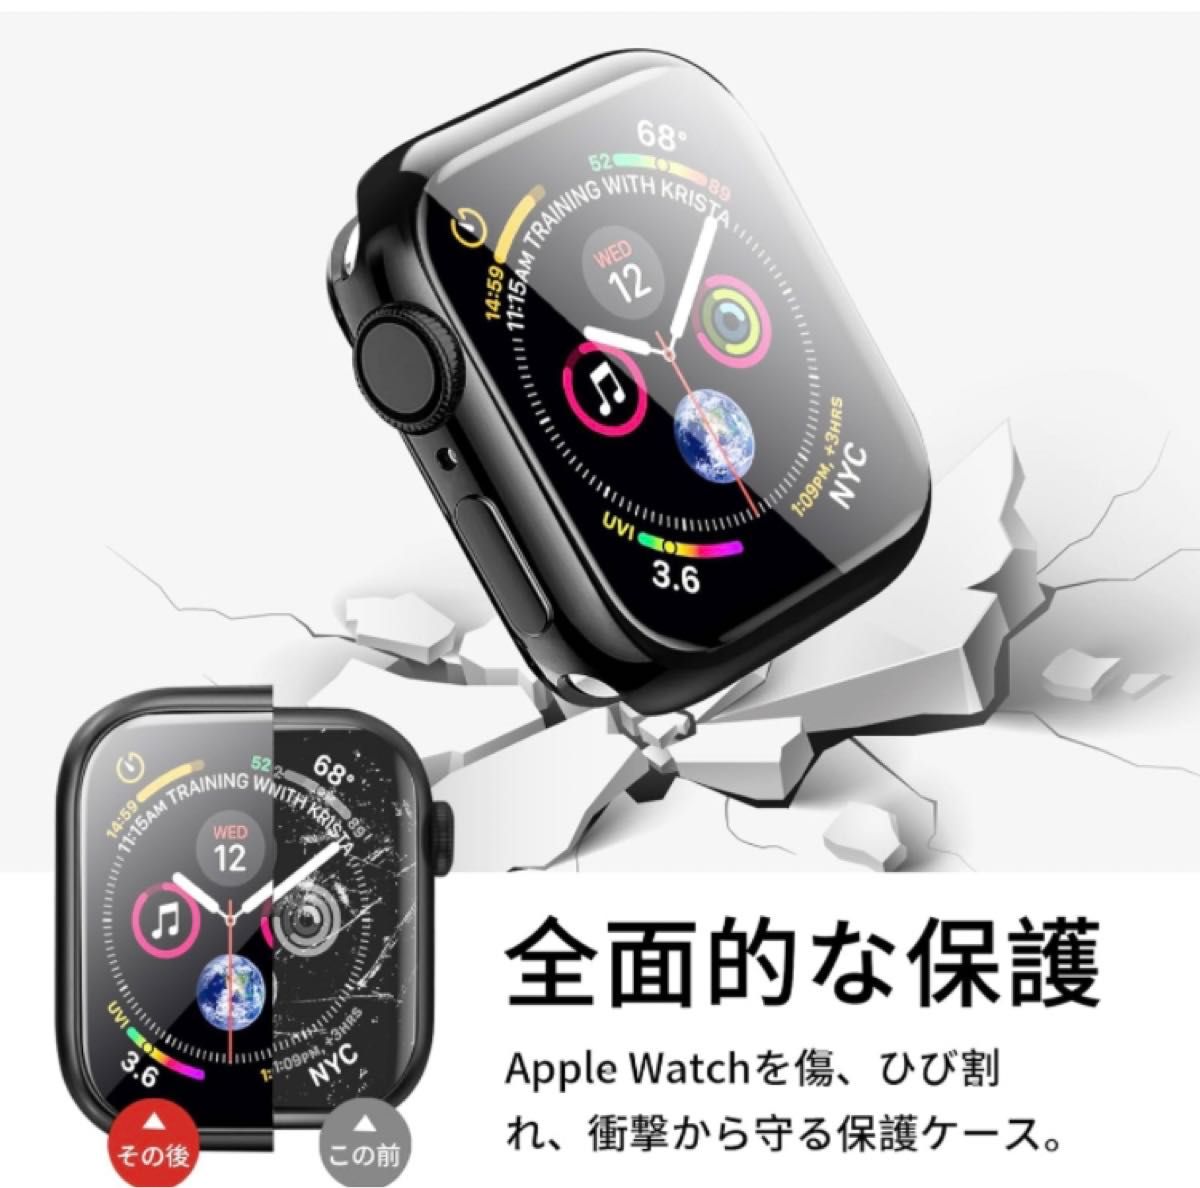 Apple Watch ケース 49mm ブラック 2つセット アップルウォッチ カバー 画面保護 取り付け簡単 超軽量型